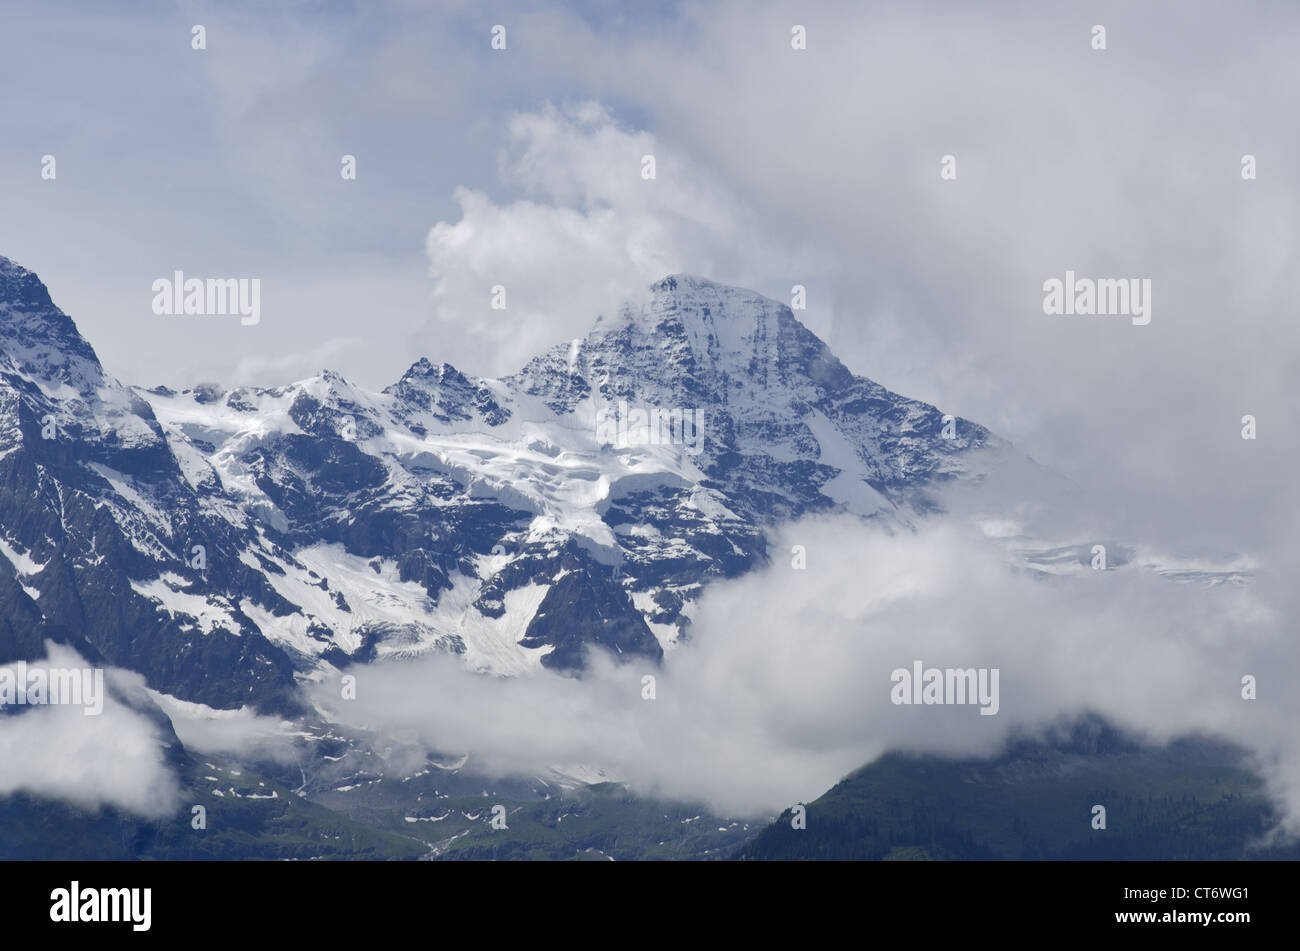 Ice clad mountains, Switzerland Stock Photo